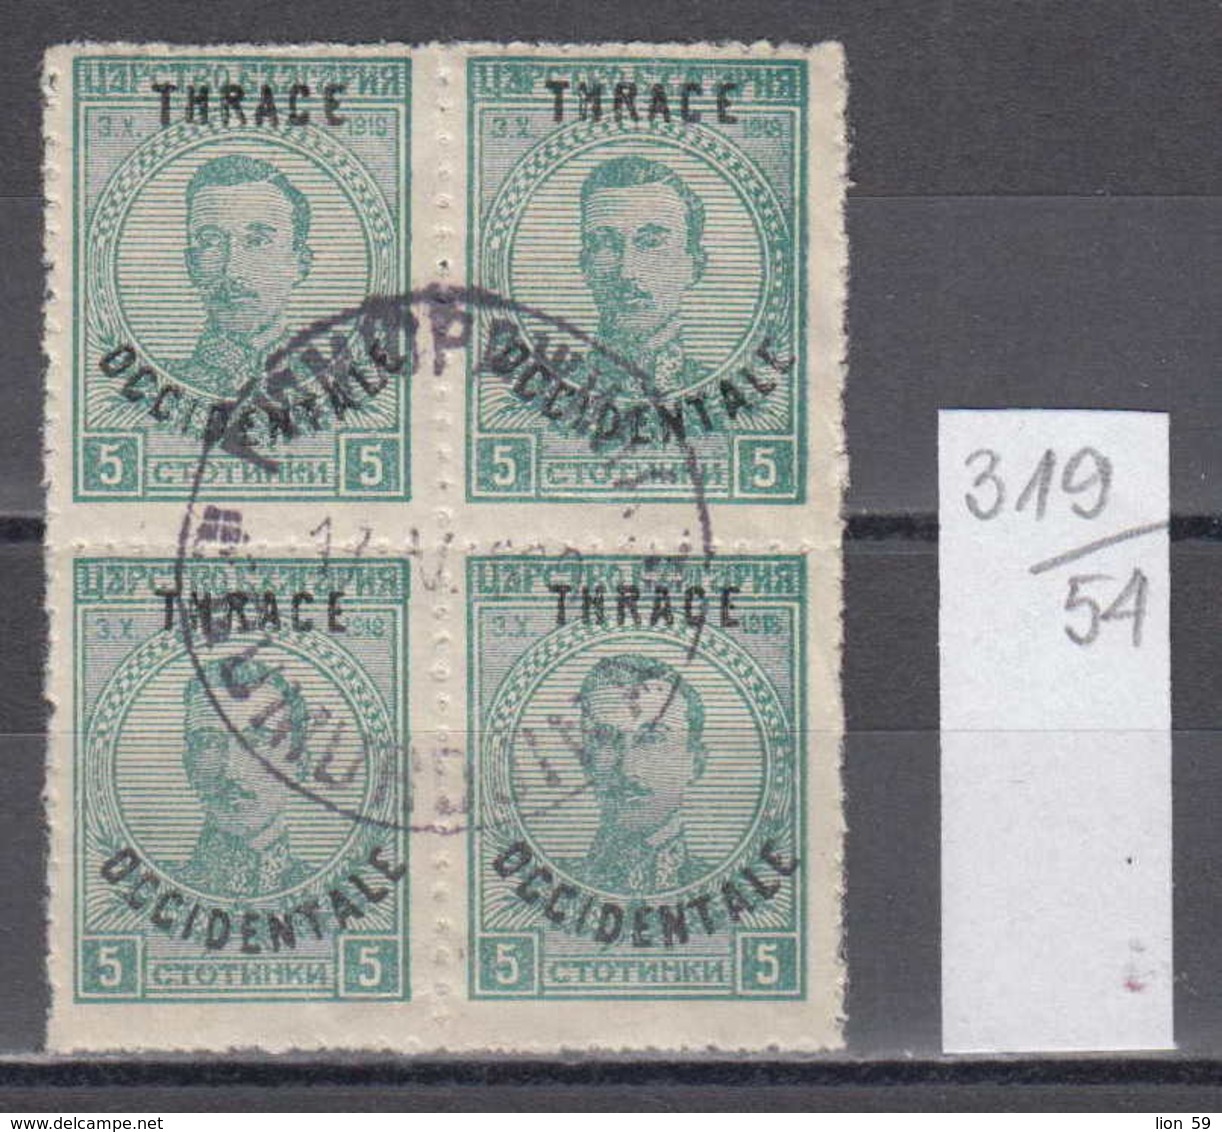 54K319 / Thrace Thrakien Trakia 1920 Michel Nr. 20 Overprint Bulgaria "TRACE OCCIDENTALE" Used GUMURDJINA Greece Grece - Thracië